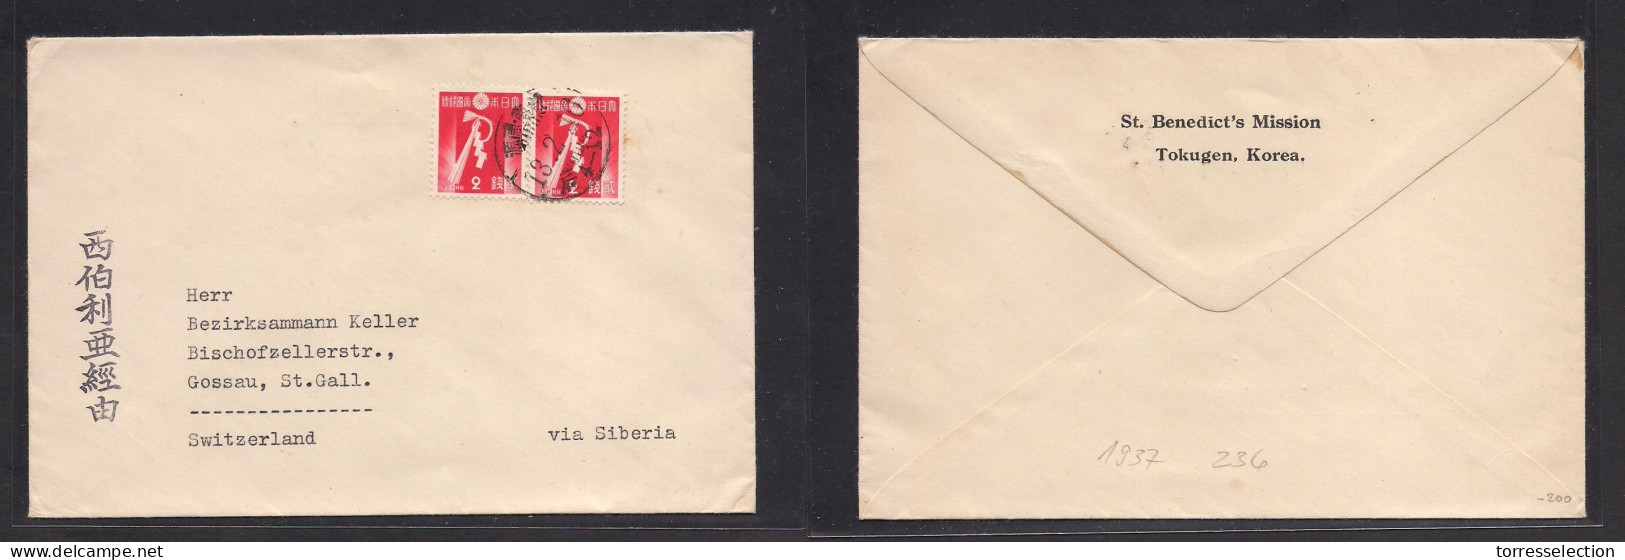 KOREA. 1937 (16 Feb) Tokugen - Switzerland, St. Gallen. Japanese Occup Via Siberia. Multifkd Japanese Stamps Envelope, C - Corée (...-1945)